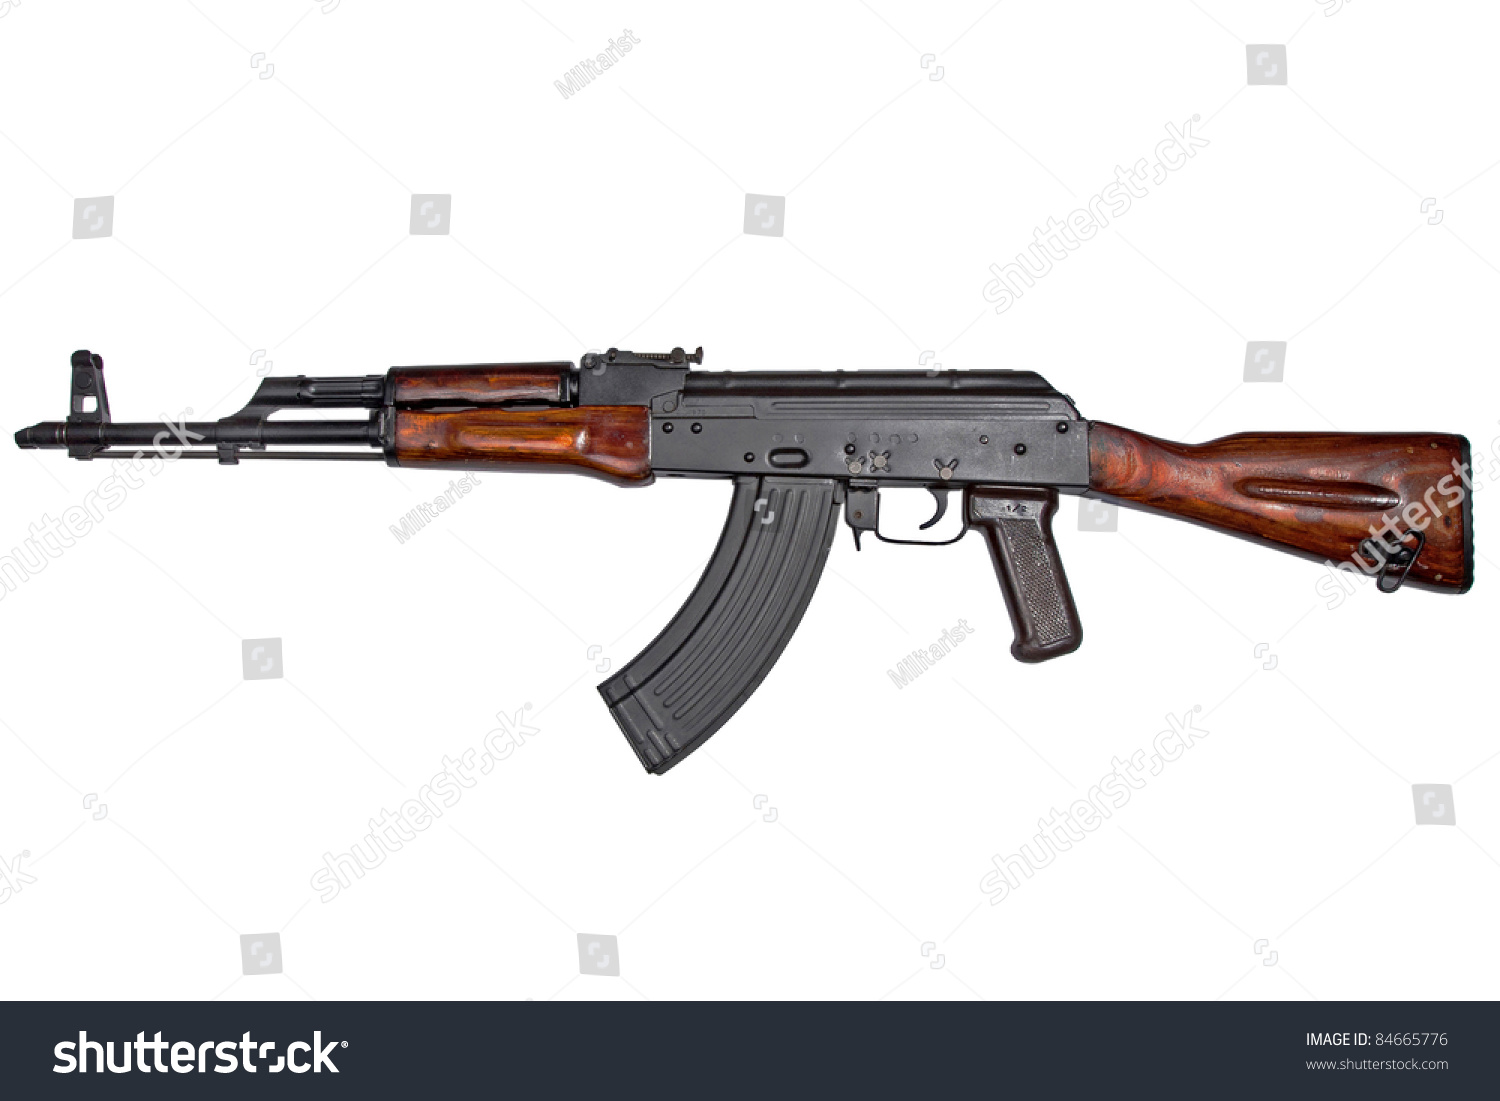 Akm Avtomat Kalashnikova Kalashnikov Assault Rifle On White Stock Photo